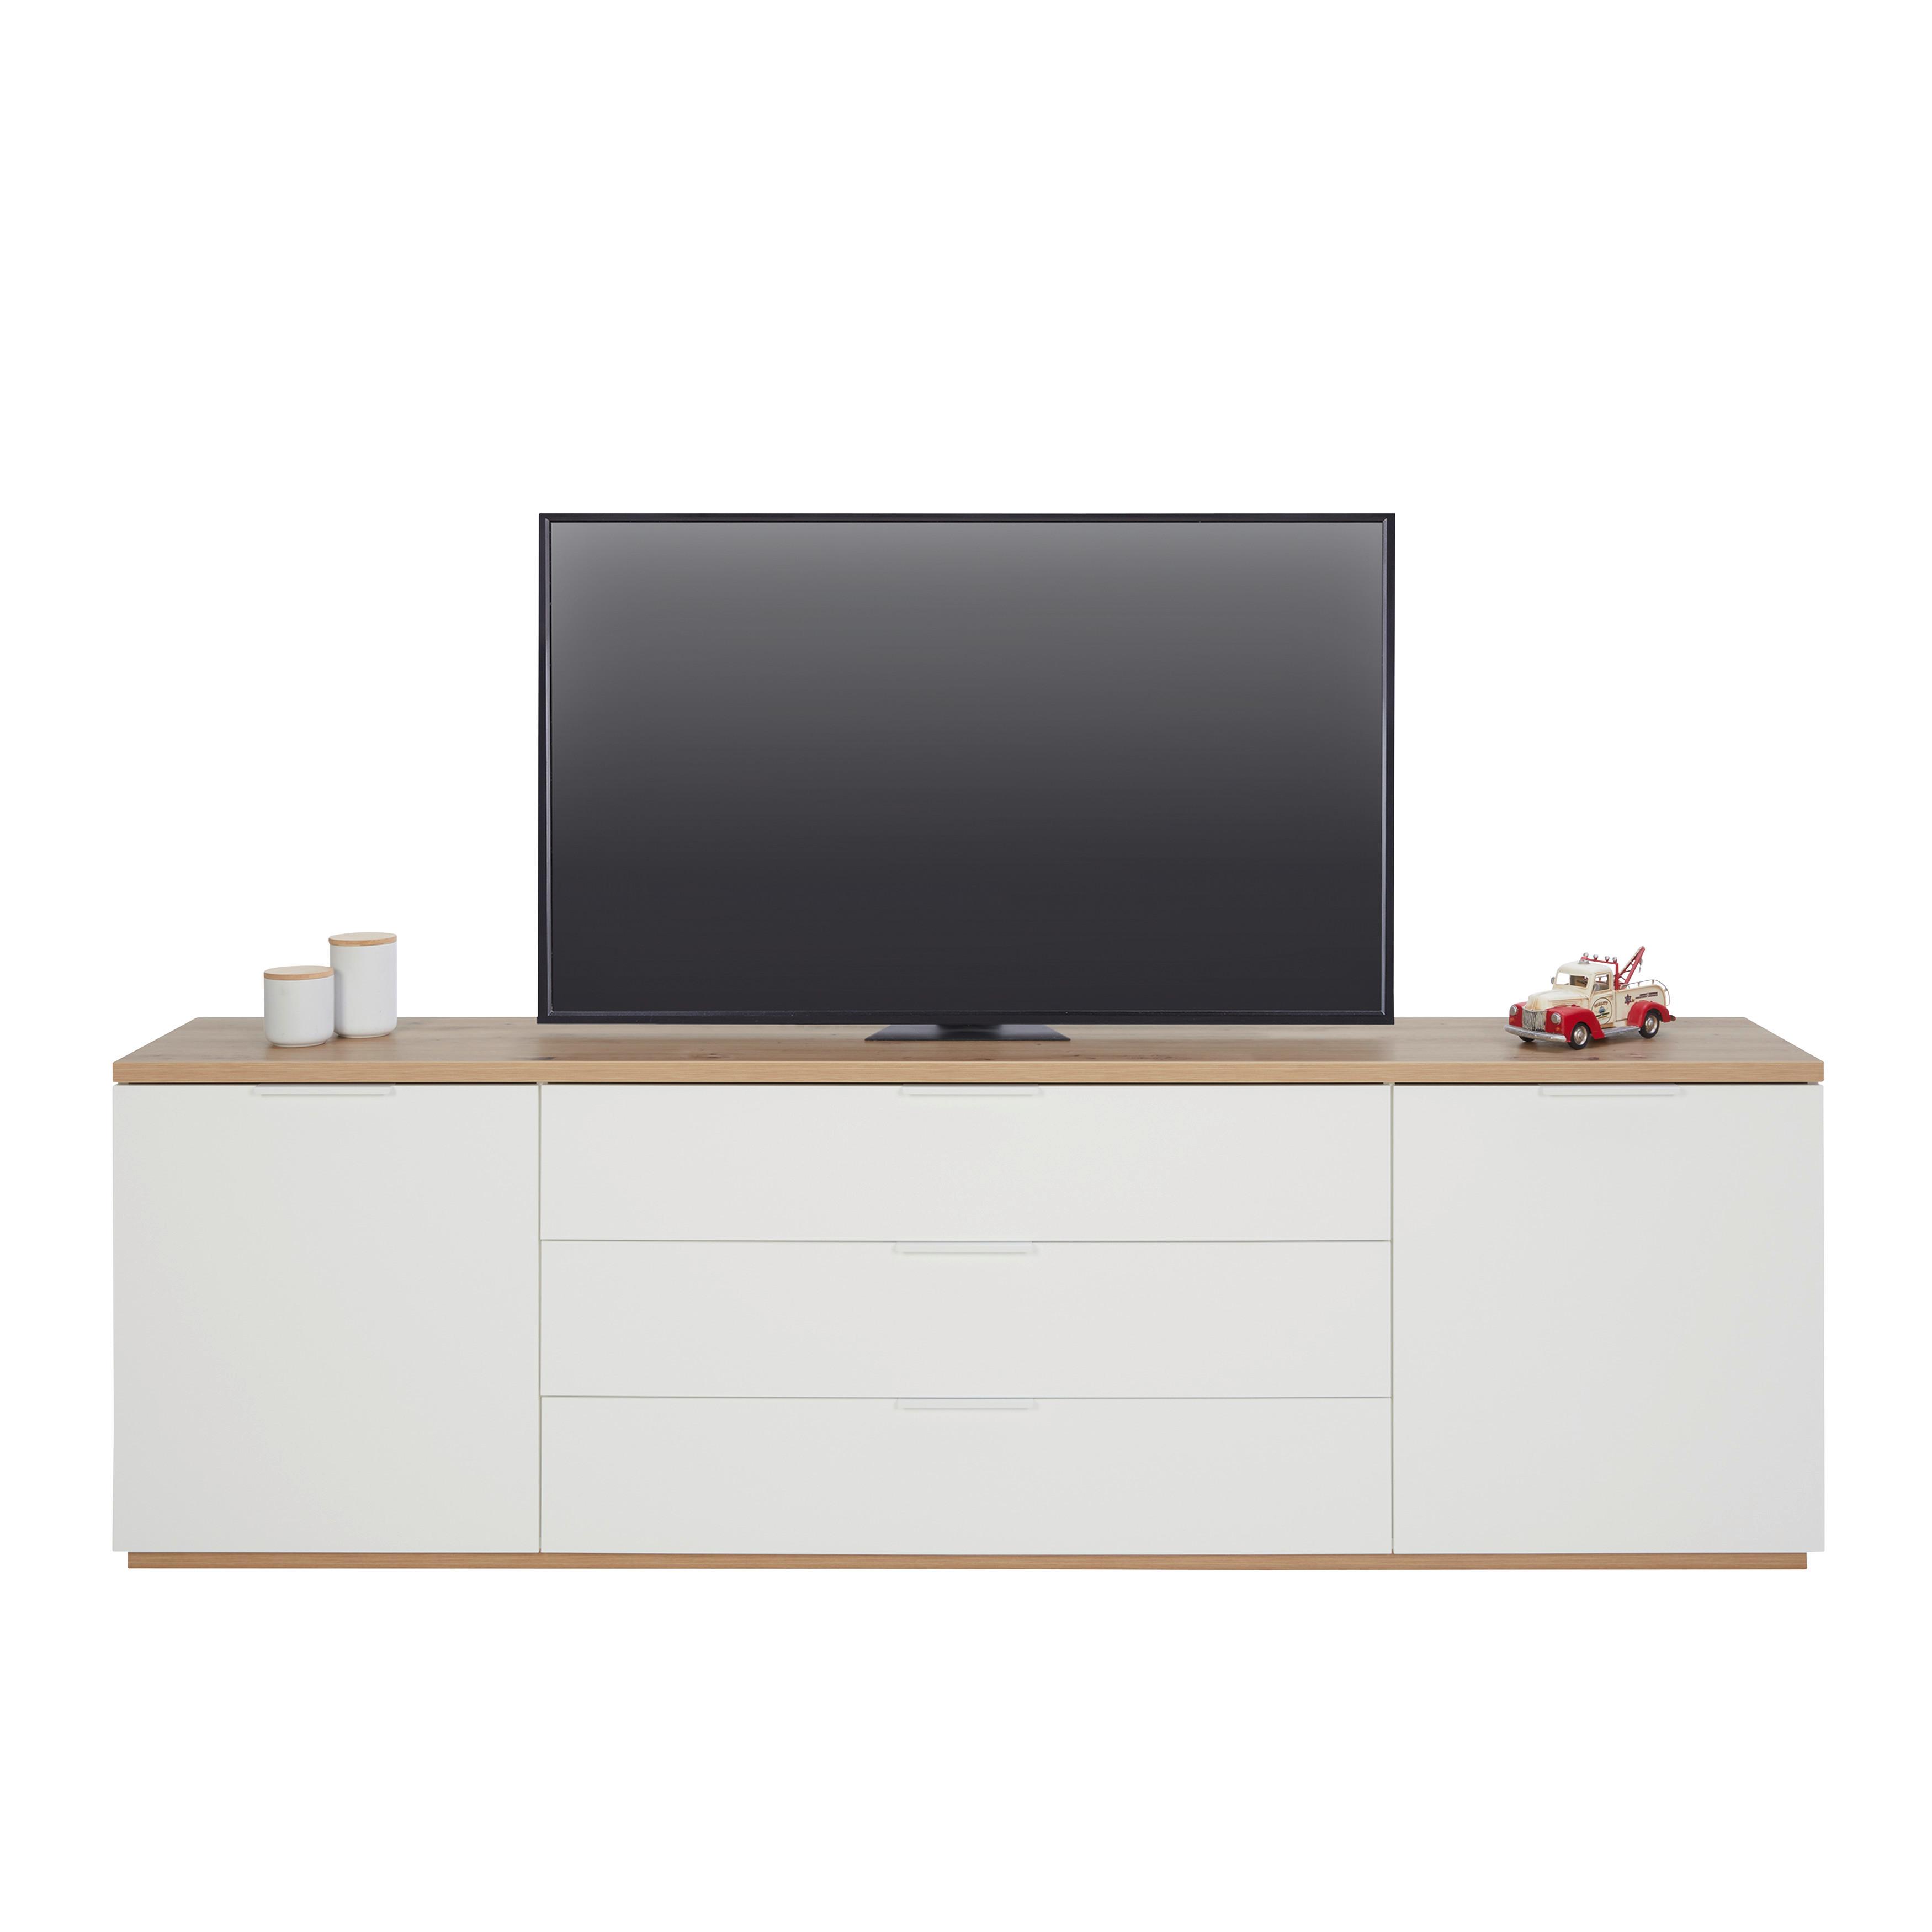 Tv-elem Wide - Magasfényű fehér/Artisan tölgy, modern, Faalapú anyag/Fém (240/75/40cm) - Modern Living